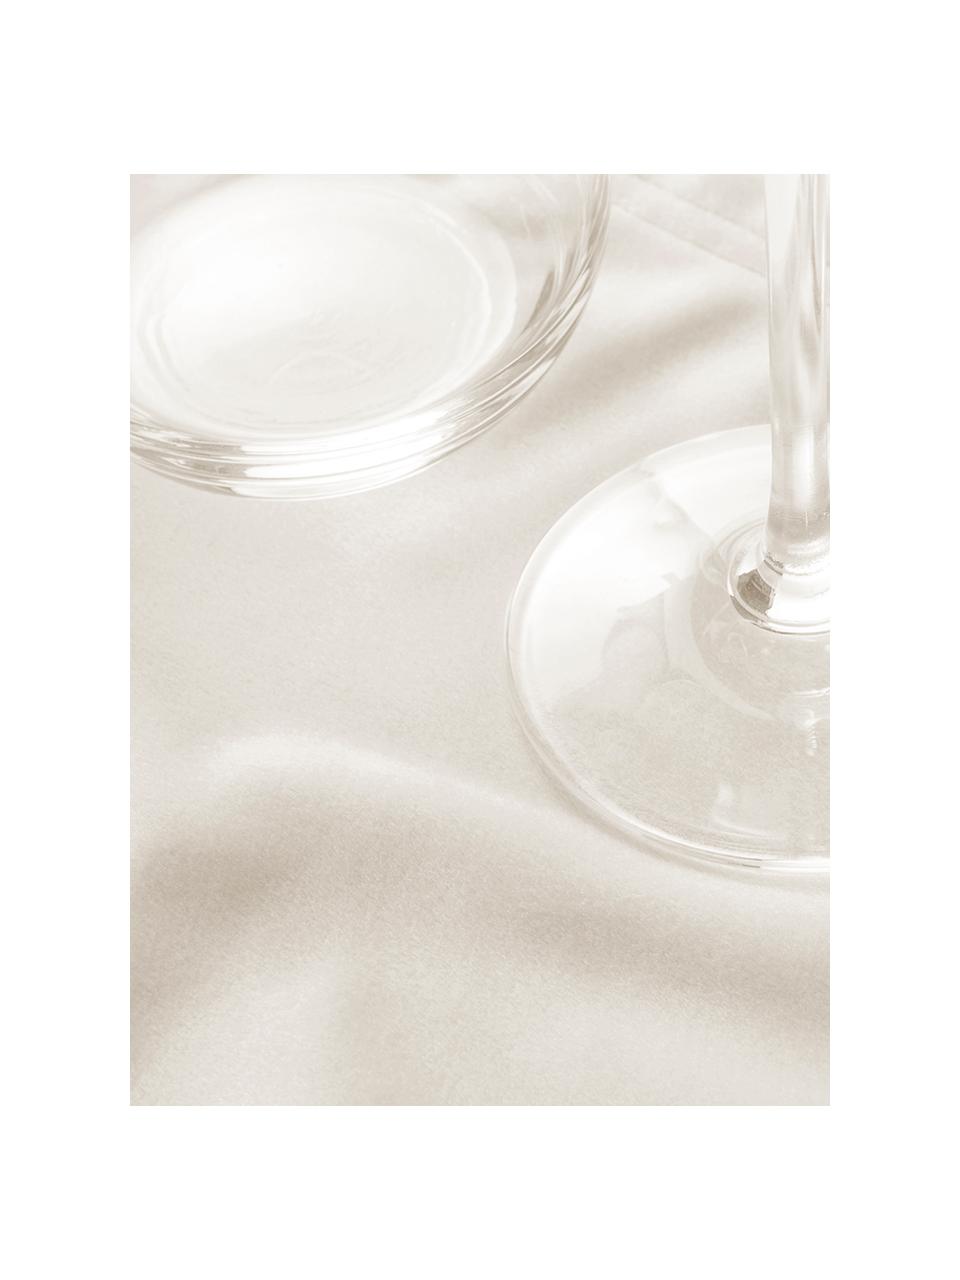 Fluwelen placemats Simone, 2 stuks, 100% polyester fluweel, Wit, 35 x 45 cm